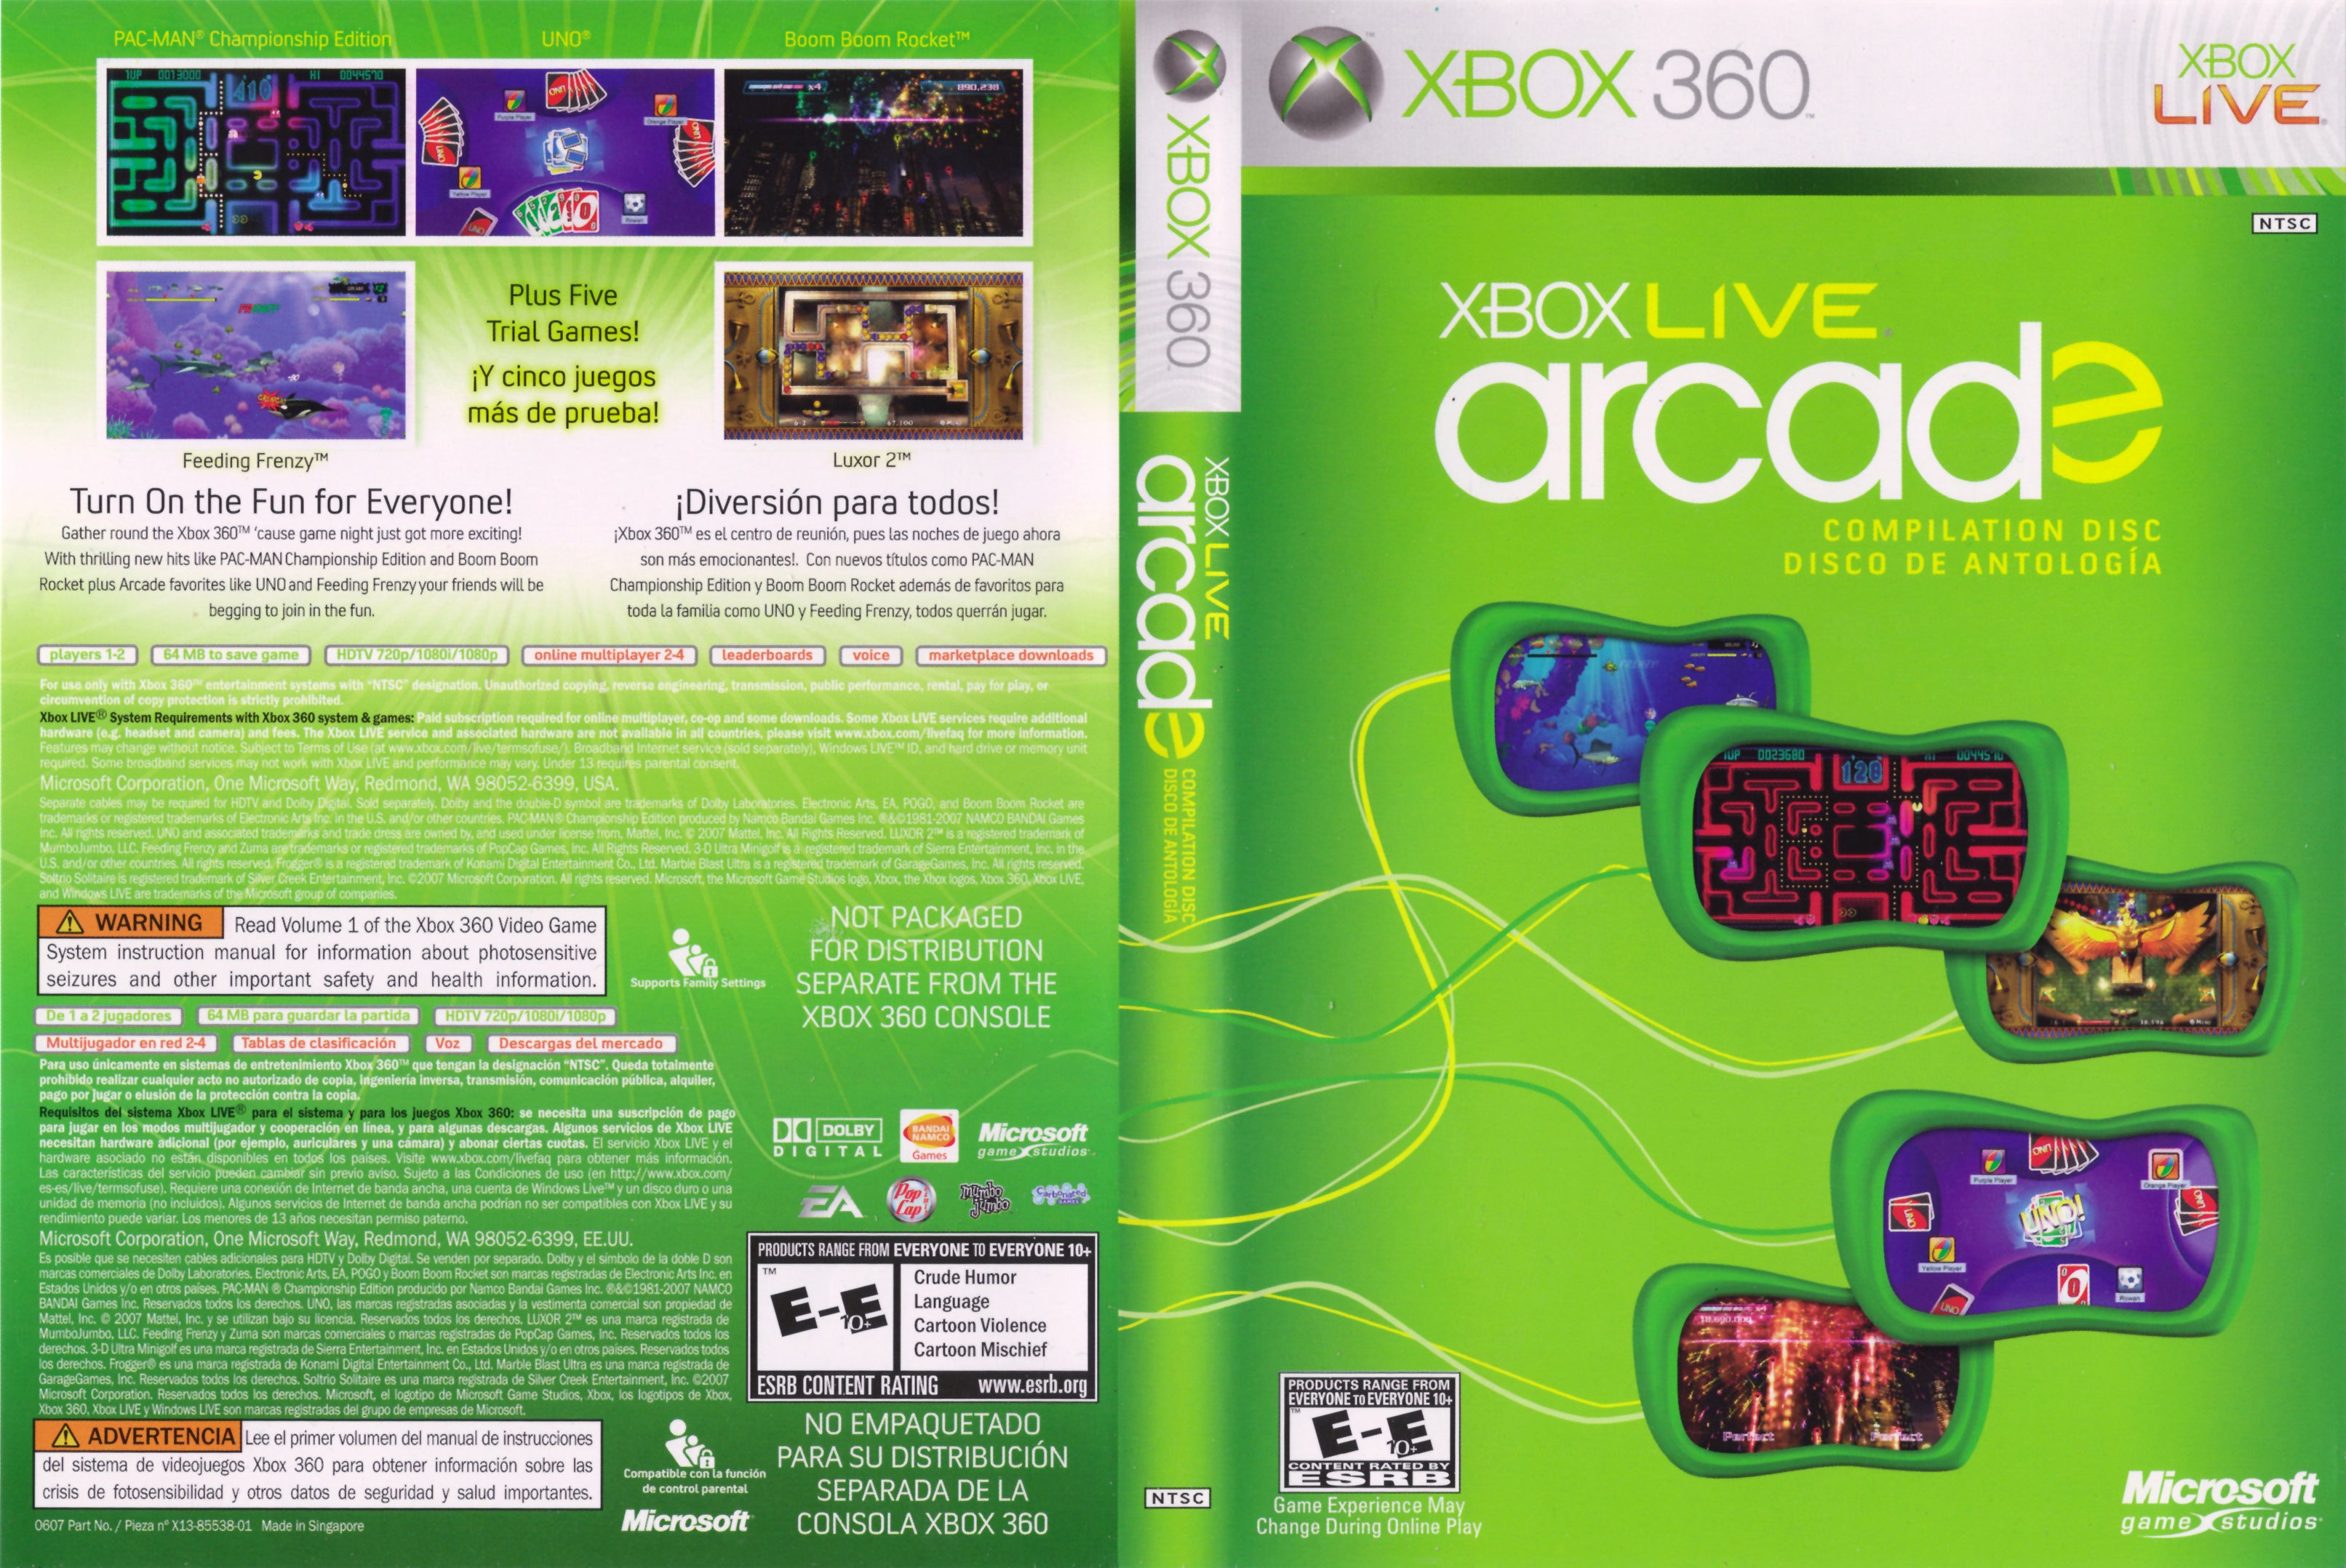 Xbox live games. Xbox Live Xbox 360. Xbox Arcade 360 игры диск. Xbox 360 Arcade. Xbox Live Arcade Compilation Disc для Xbox 360.